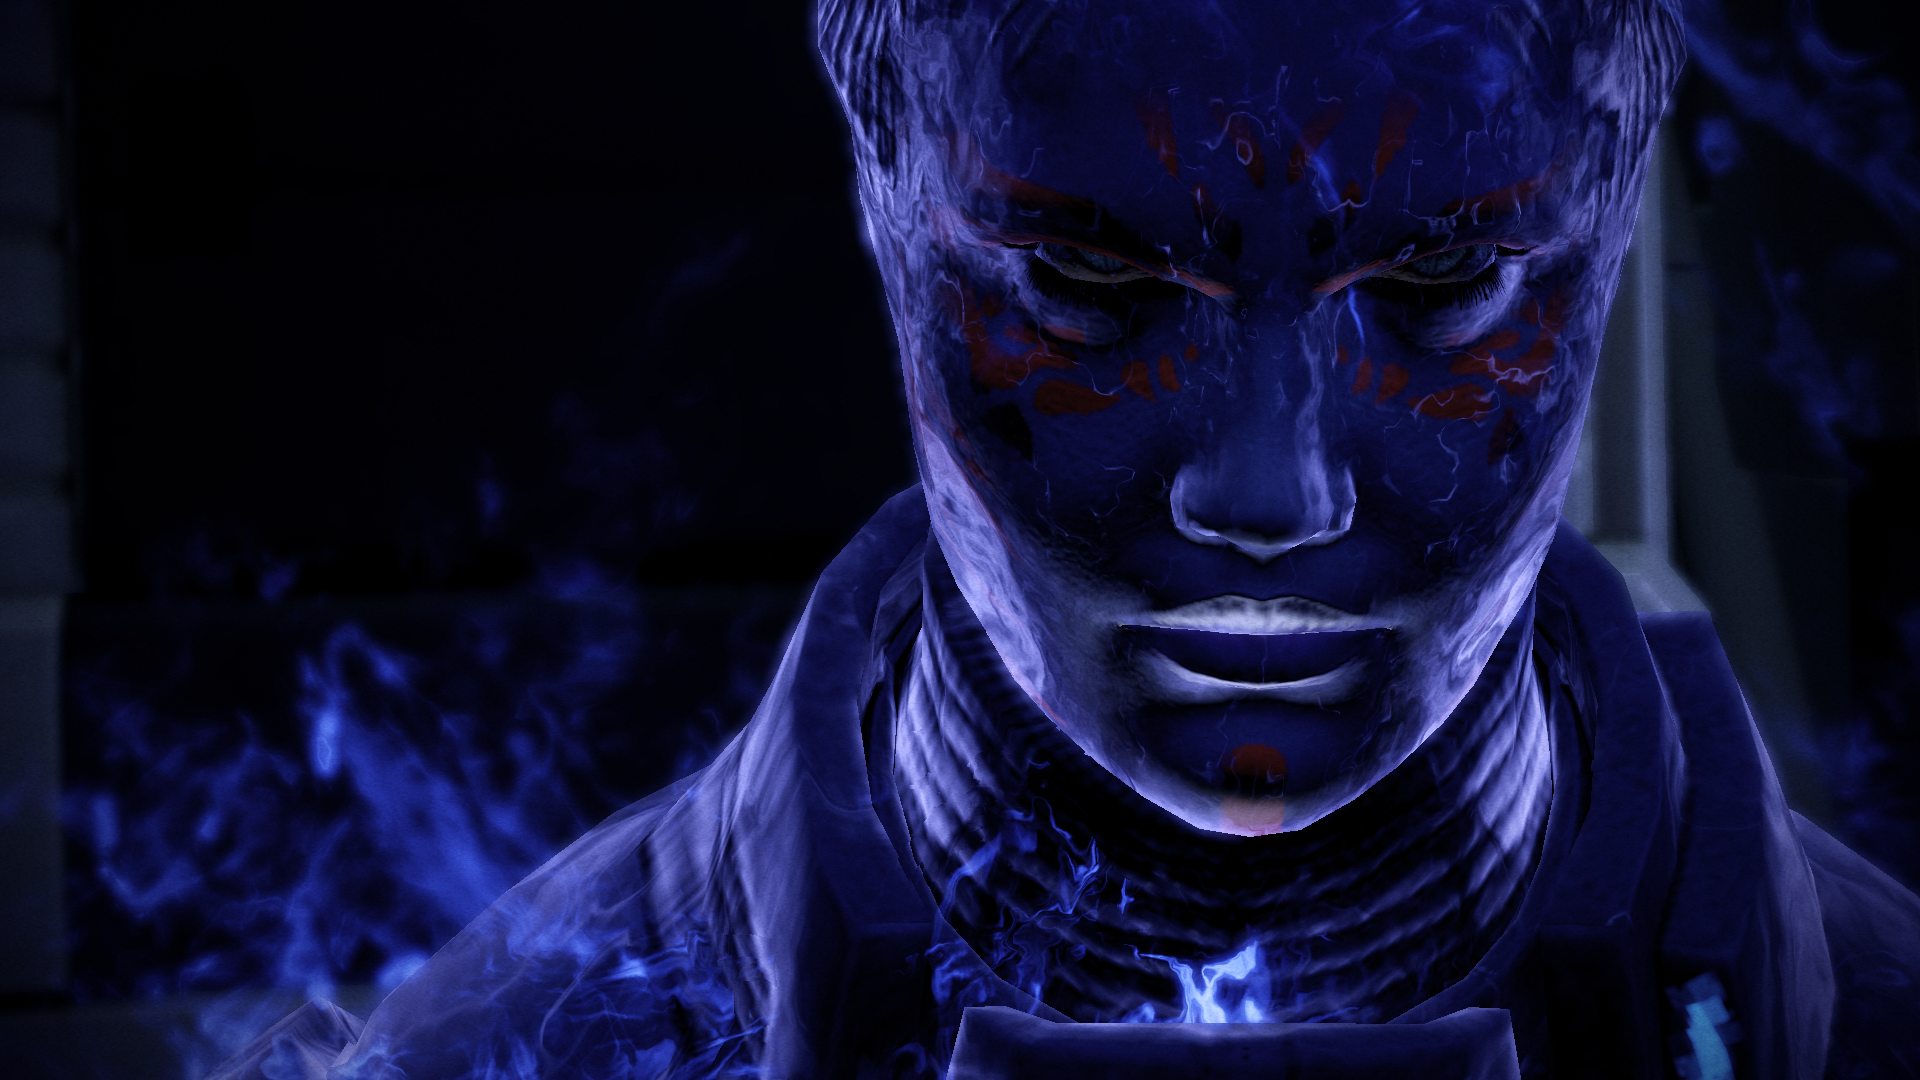 People 1920x1080 Mass Effect Asari Biotic video games Biotics video game art PC gaming science fiction science fiction women